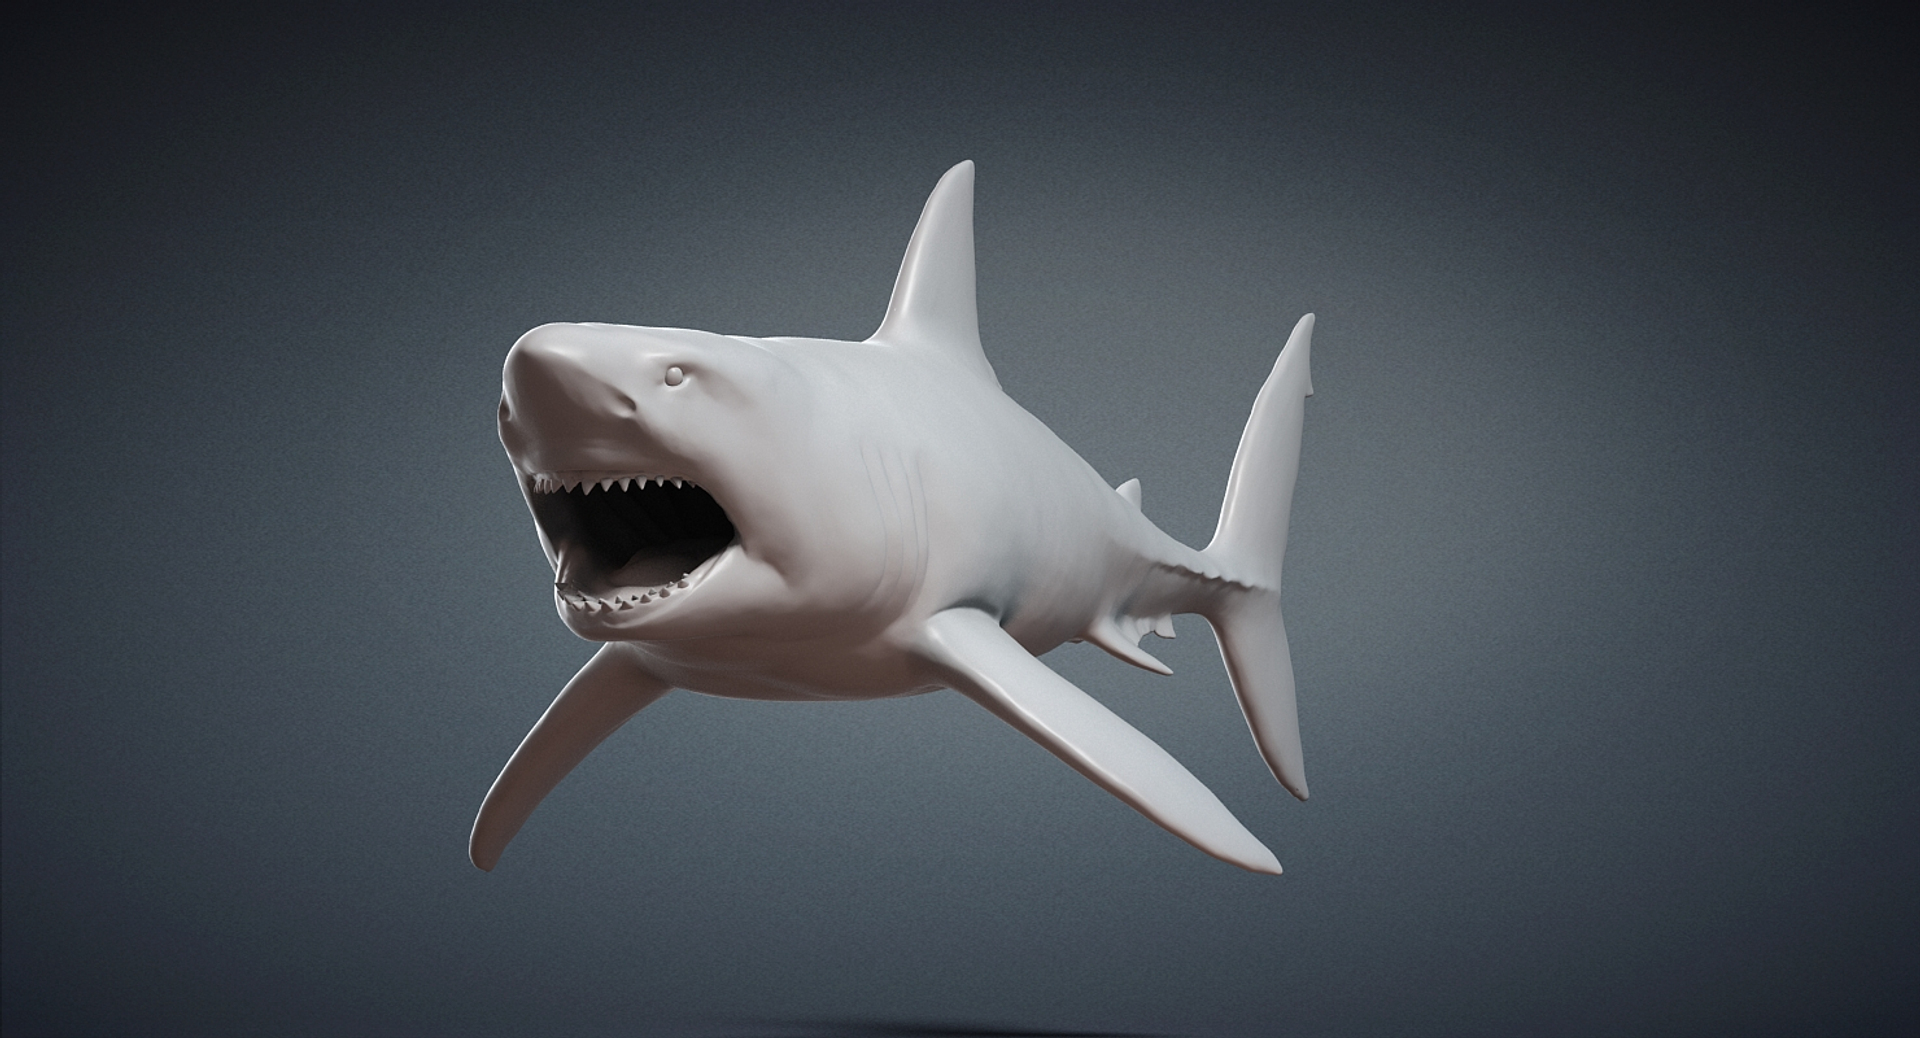 3D great white shark base mesh model https://p.turbosquid.com/ts-thumb/Ra/dzTpEp/02RAivAV/01/jpg/1513850688/1920x1080/turn_fit_q99/b64e8c3e8d859ff6eb20513fad260c3d897eacce/01-1.jpg